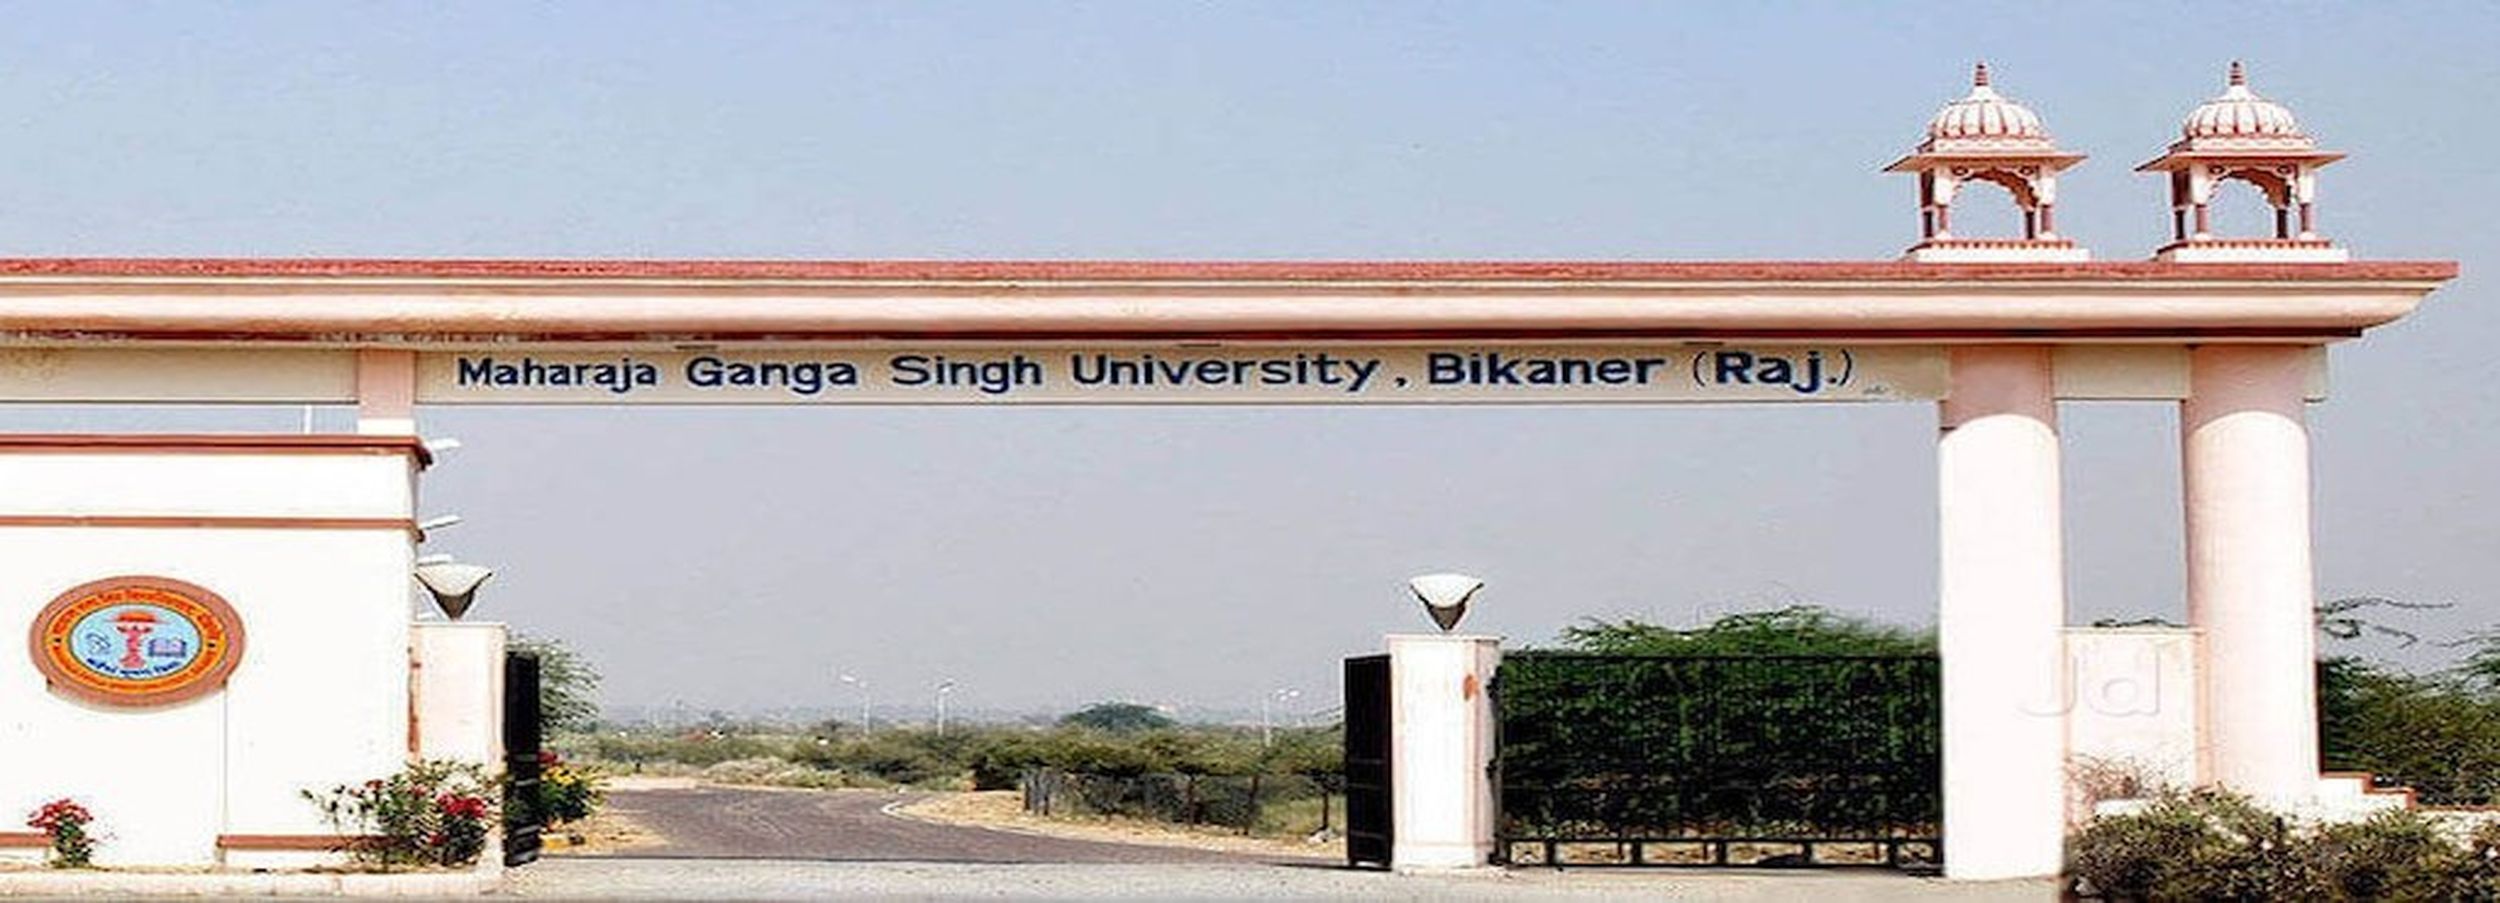 bikaner- maharaja gangasingh university law integrated course